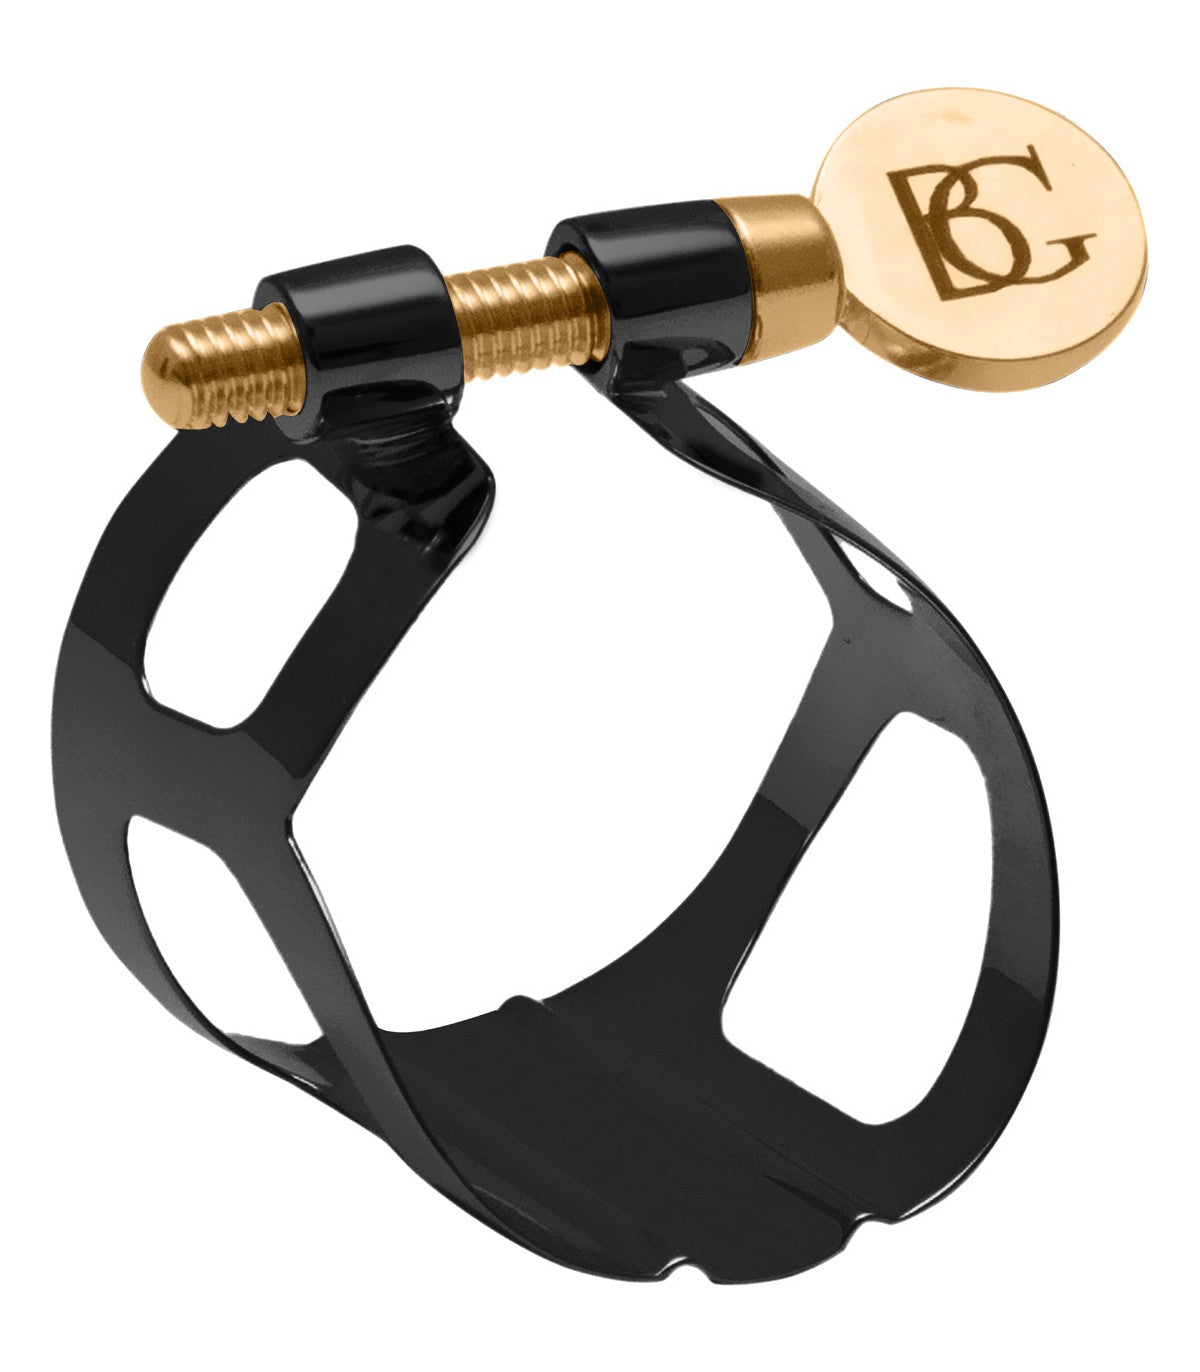 B-flat Clarinet Tradition Ligature Metal - Black Lacquered